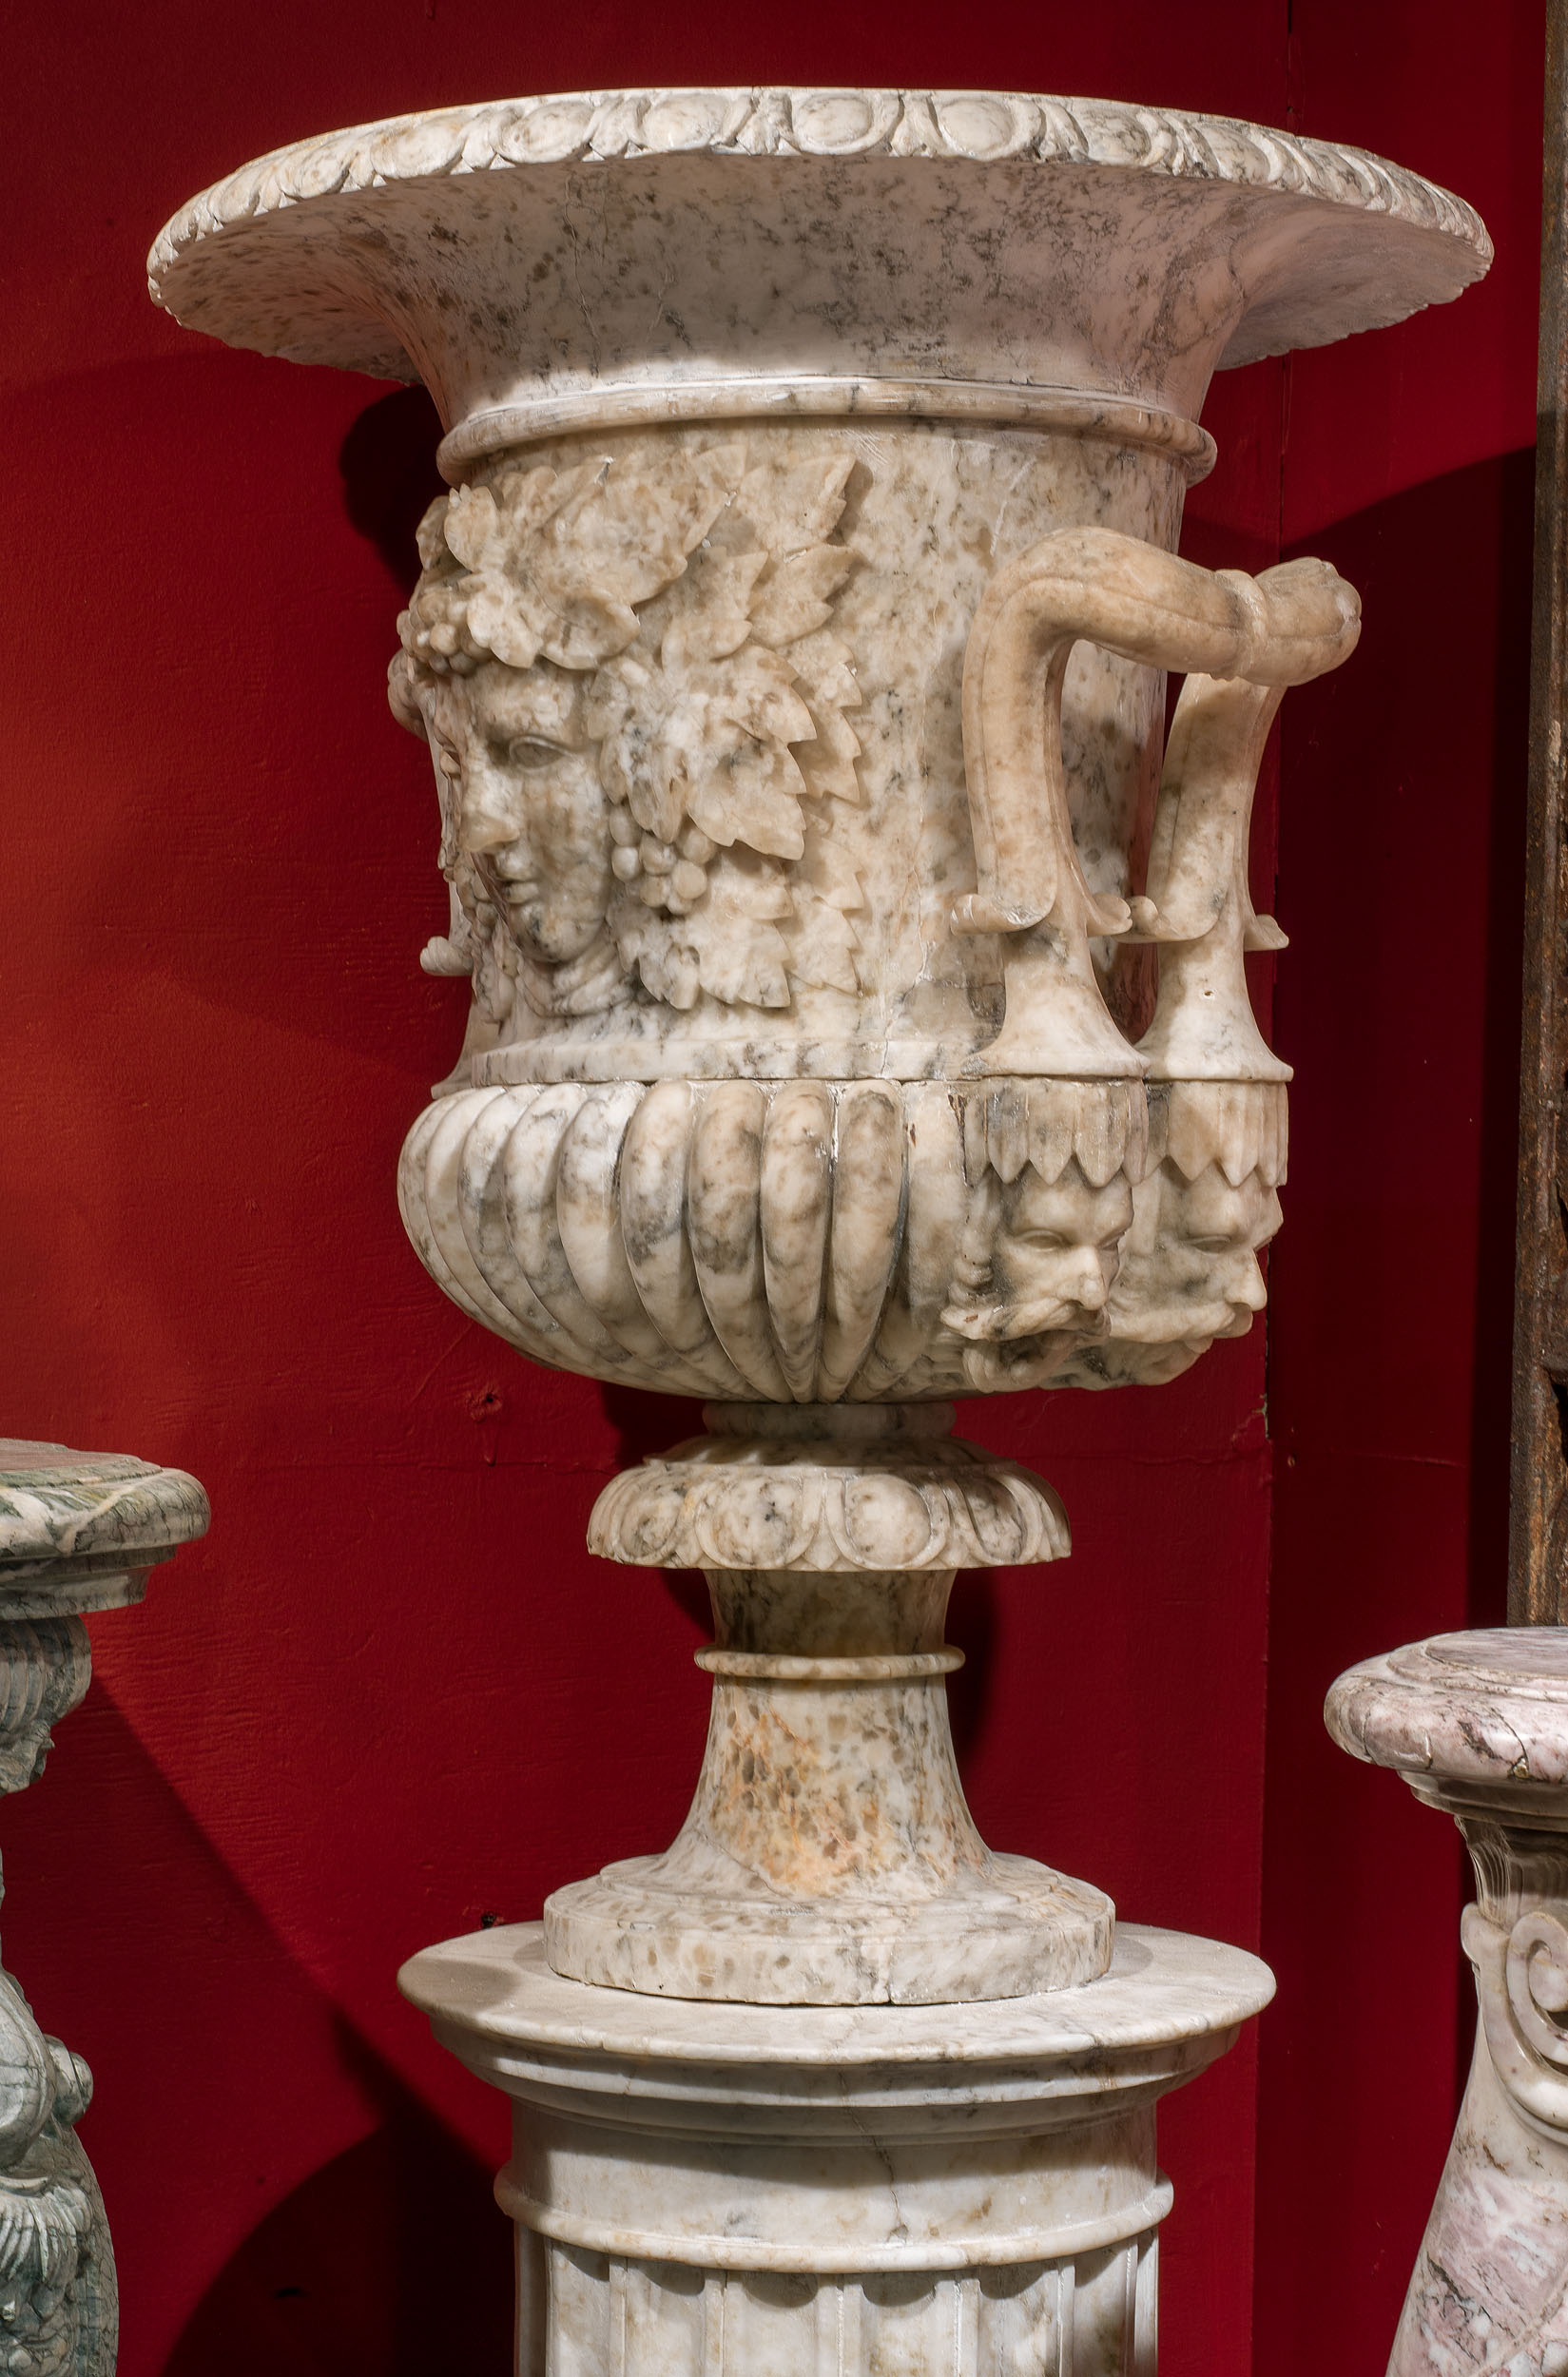 A pair of fine antique alabaster urns mounted on their original pedestals